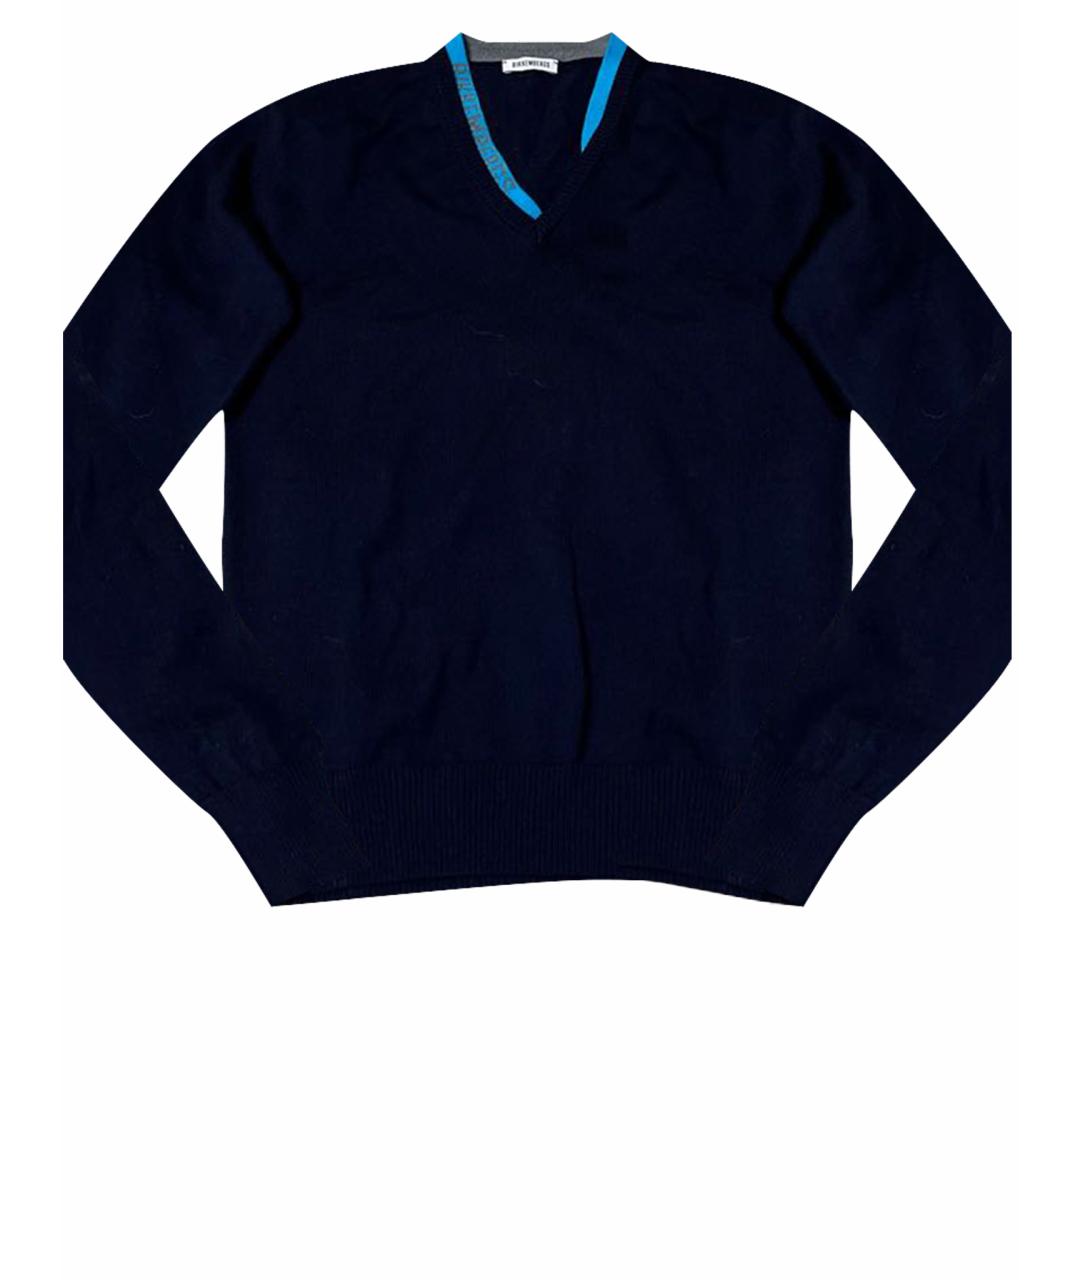 BIKKEMBERGS Темно-синий шерстяной джемпер / свитер, фото 1